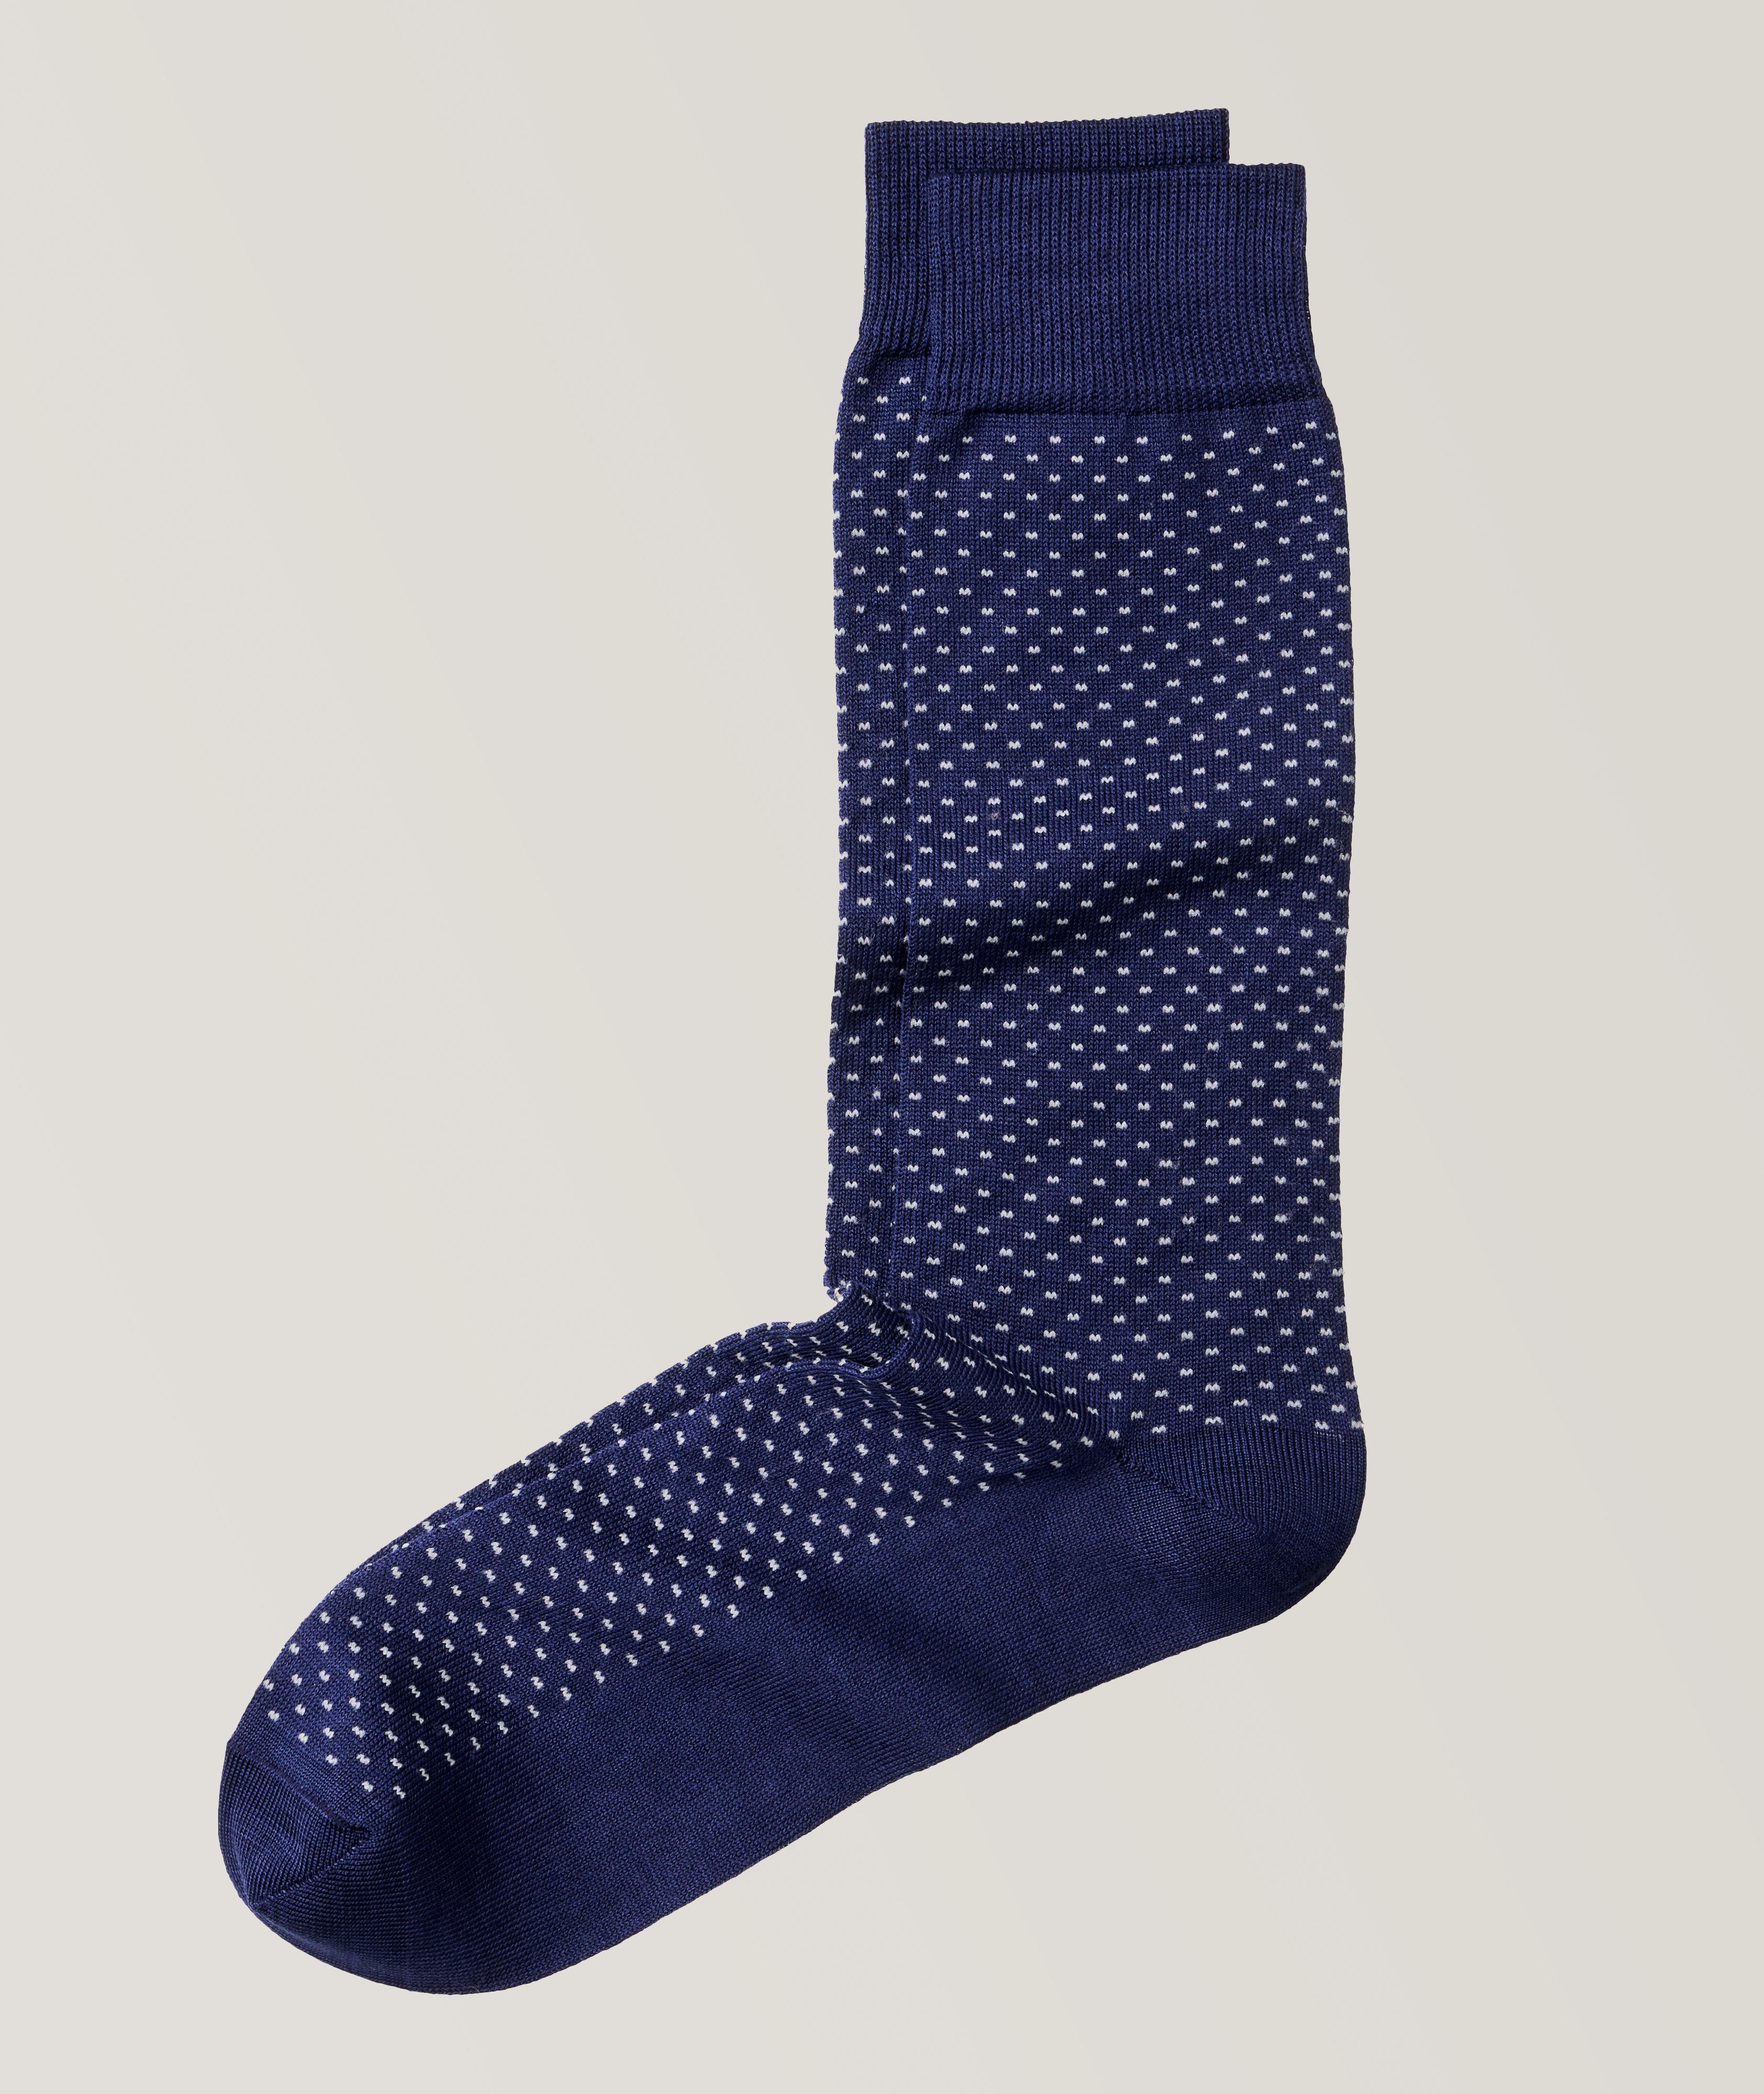 Micro Dot Cotton-Blend Socks image 0